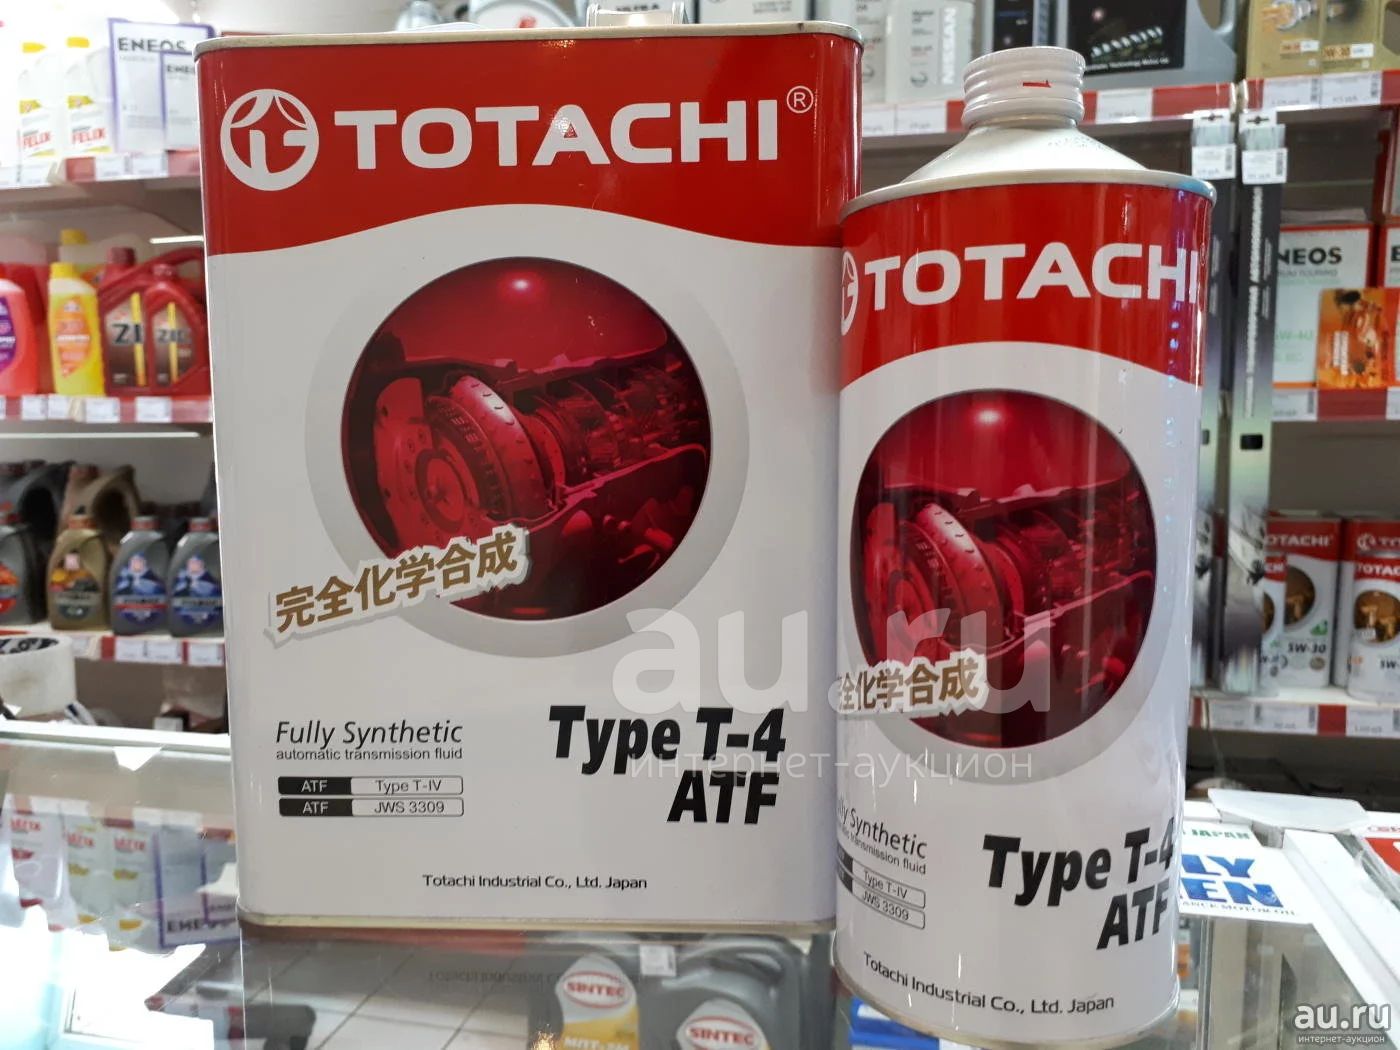 Totachi atf type